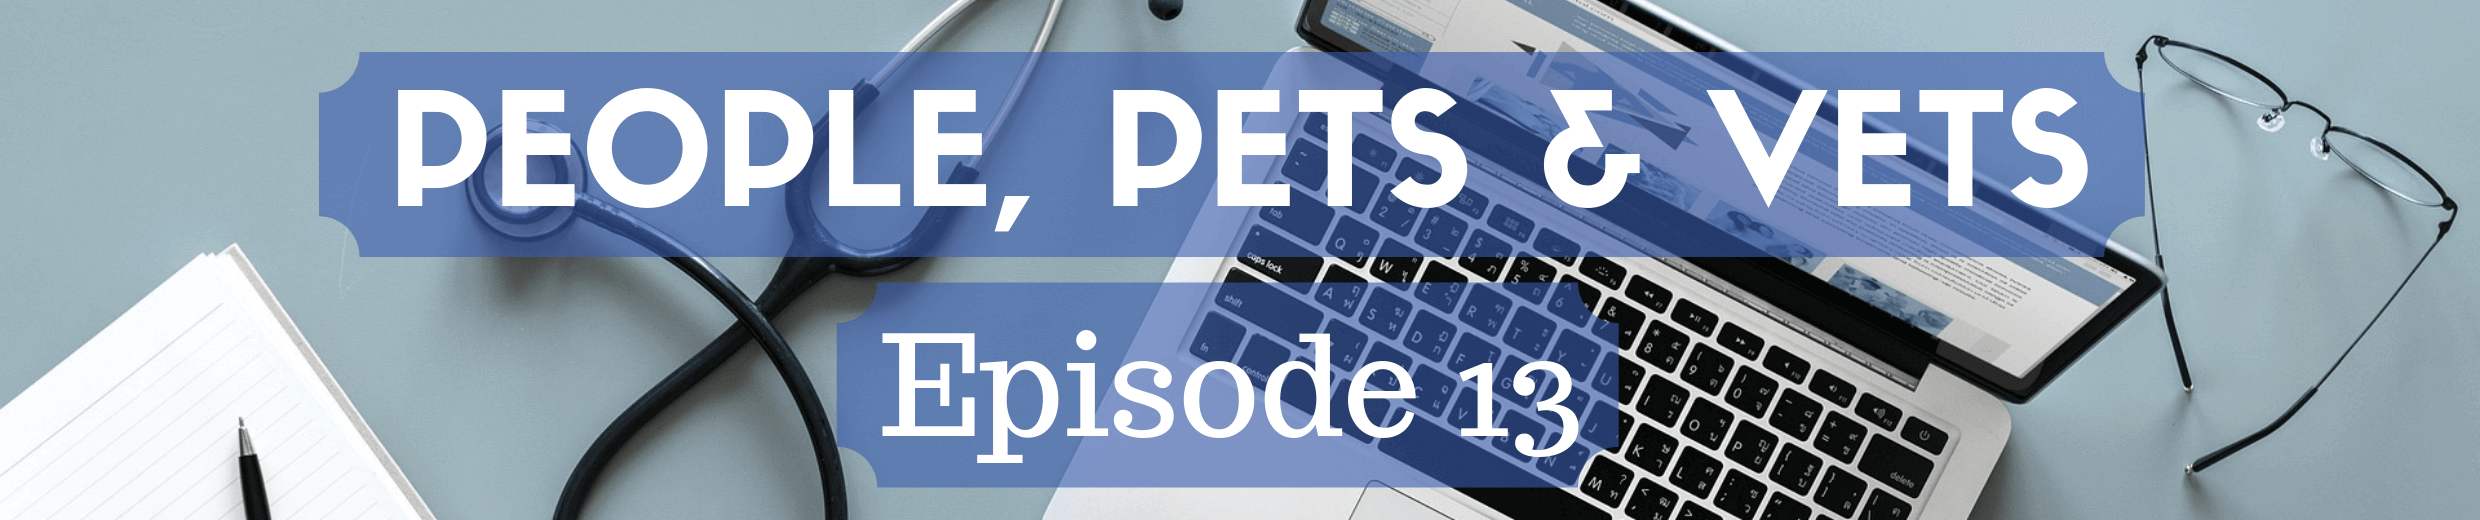 People, Pets & Vets: Episode 13